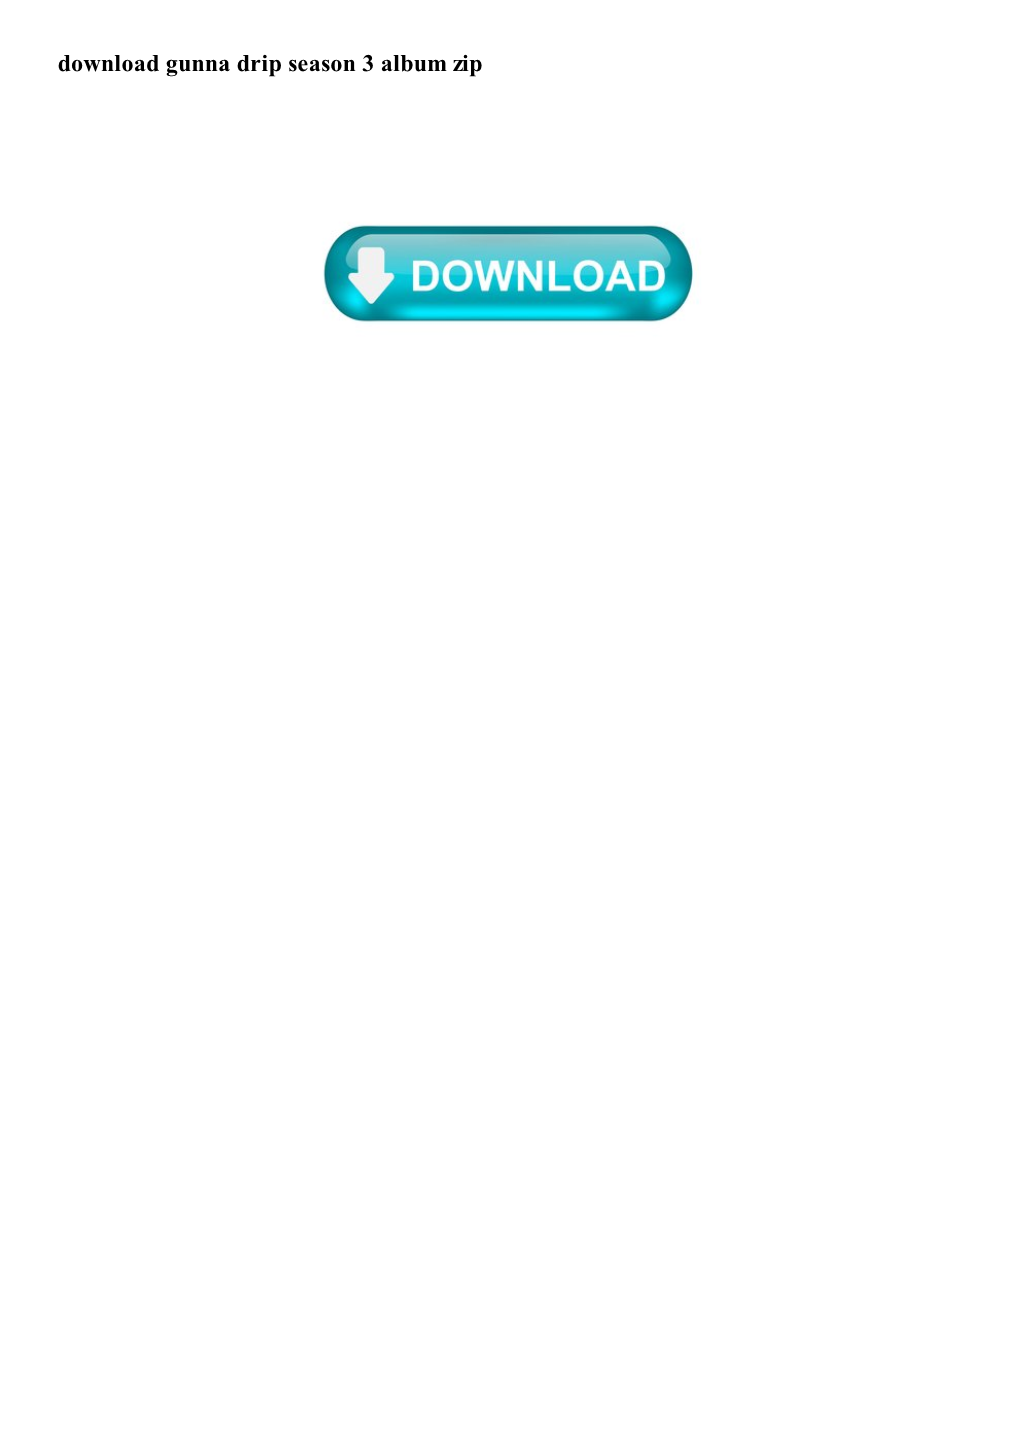 Download Gunna Drip Season 3 Album Zip ALBUM: Gunna – Drip Season 3